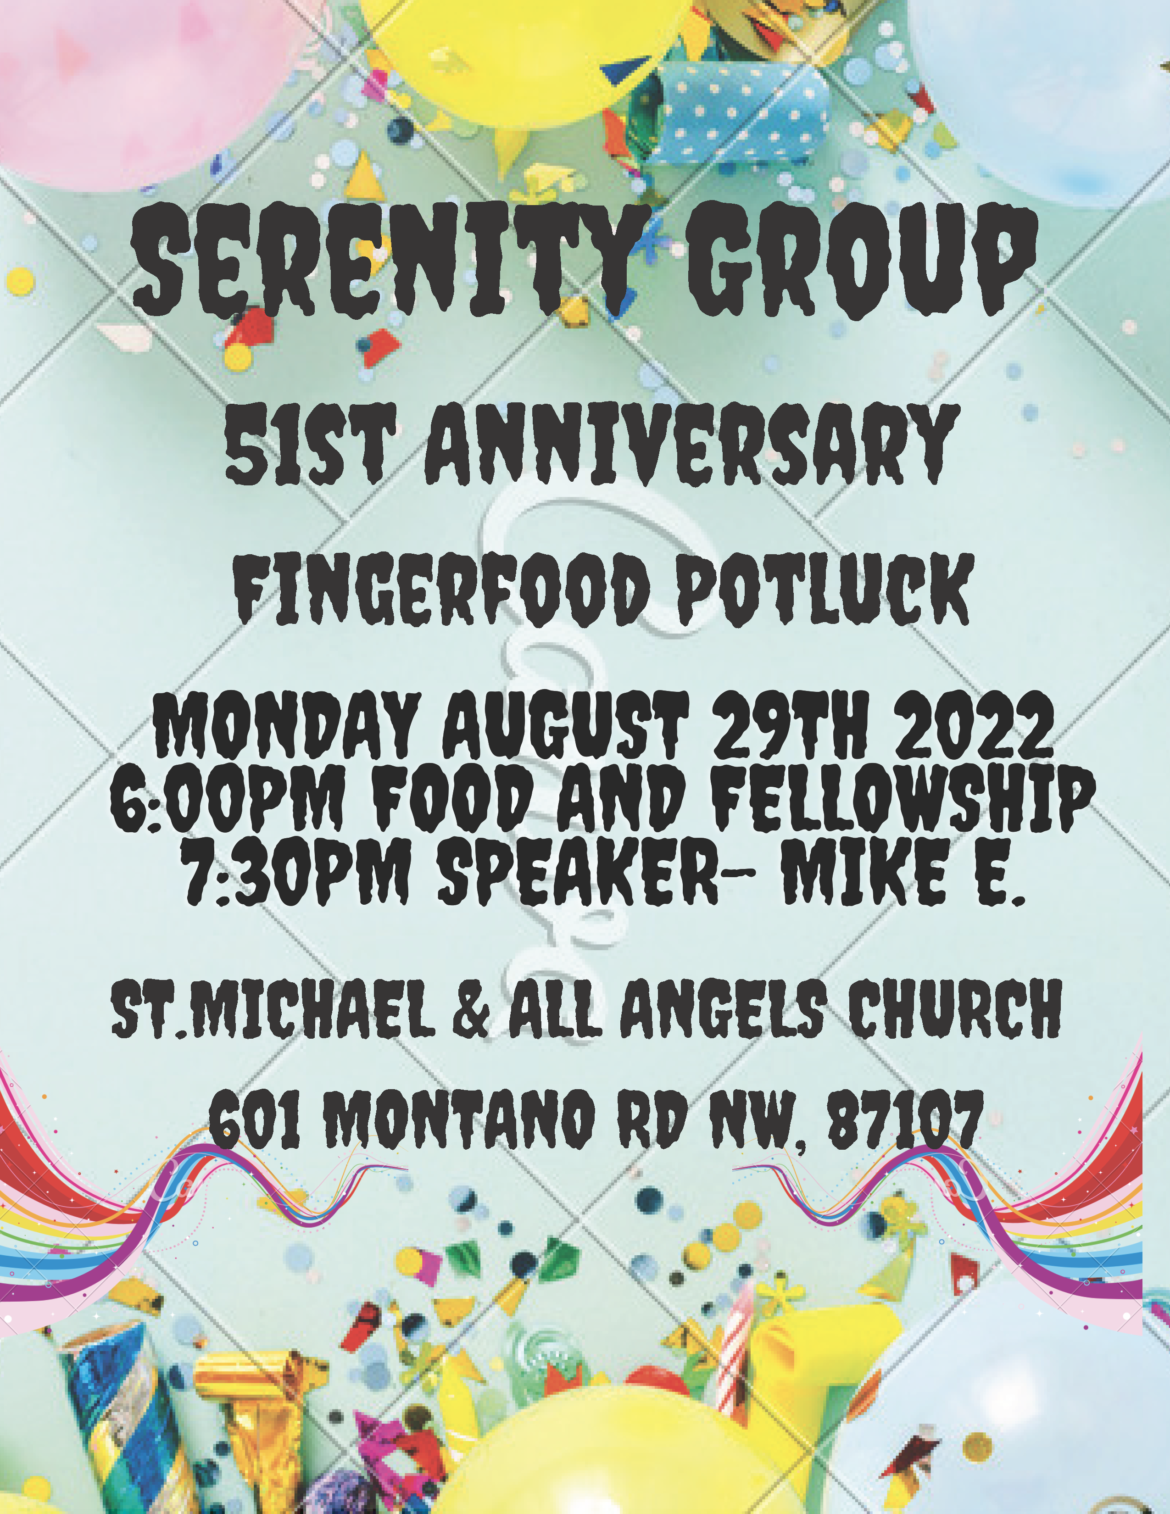 Serenity Group 51st Anniversary